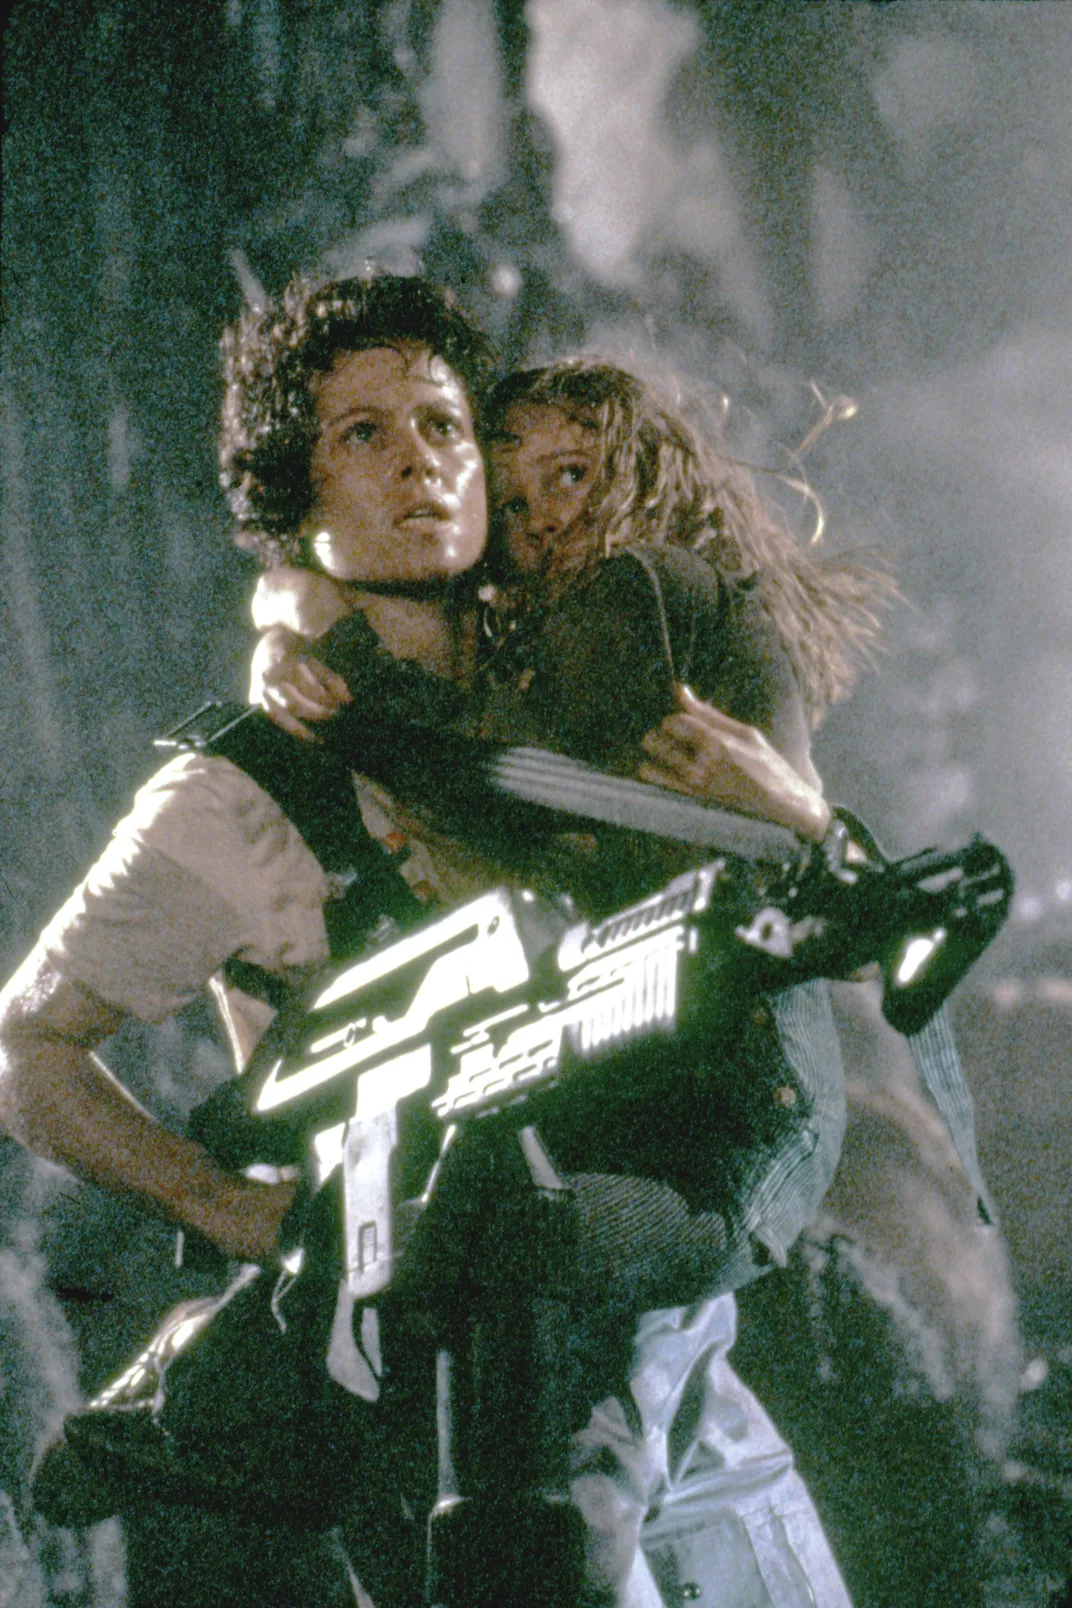 Sigourney Weaver as Ellen Ripley cradling Carrie Henn as Newt